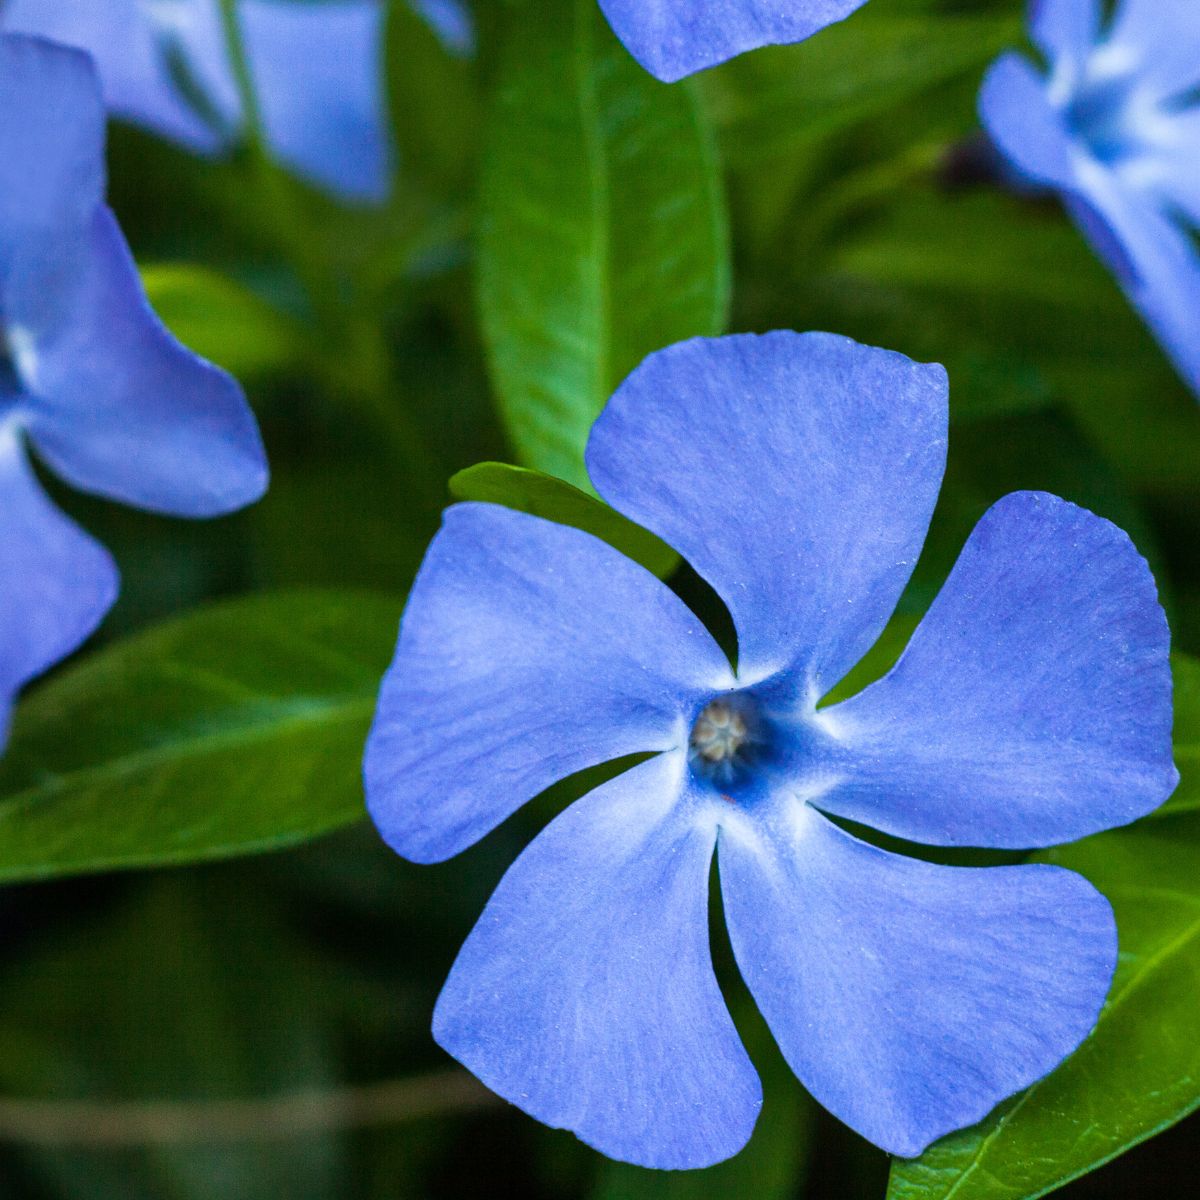 Blue periwinkle flowers.